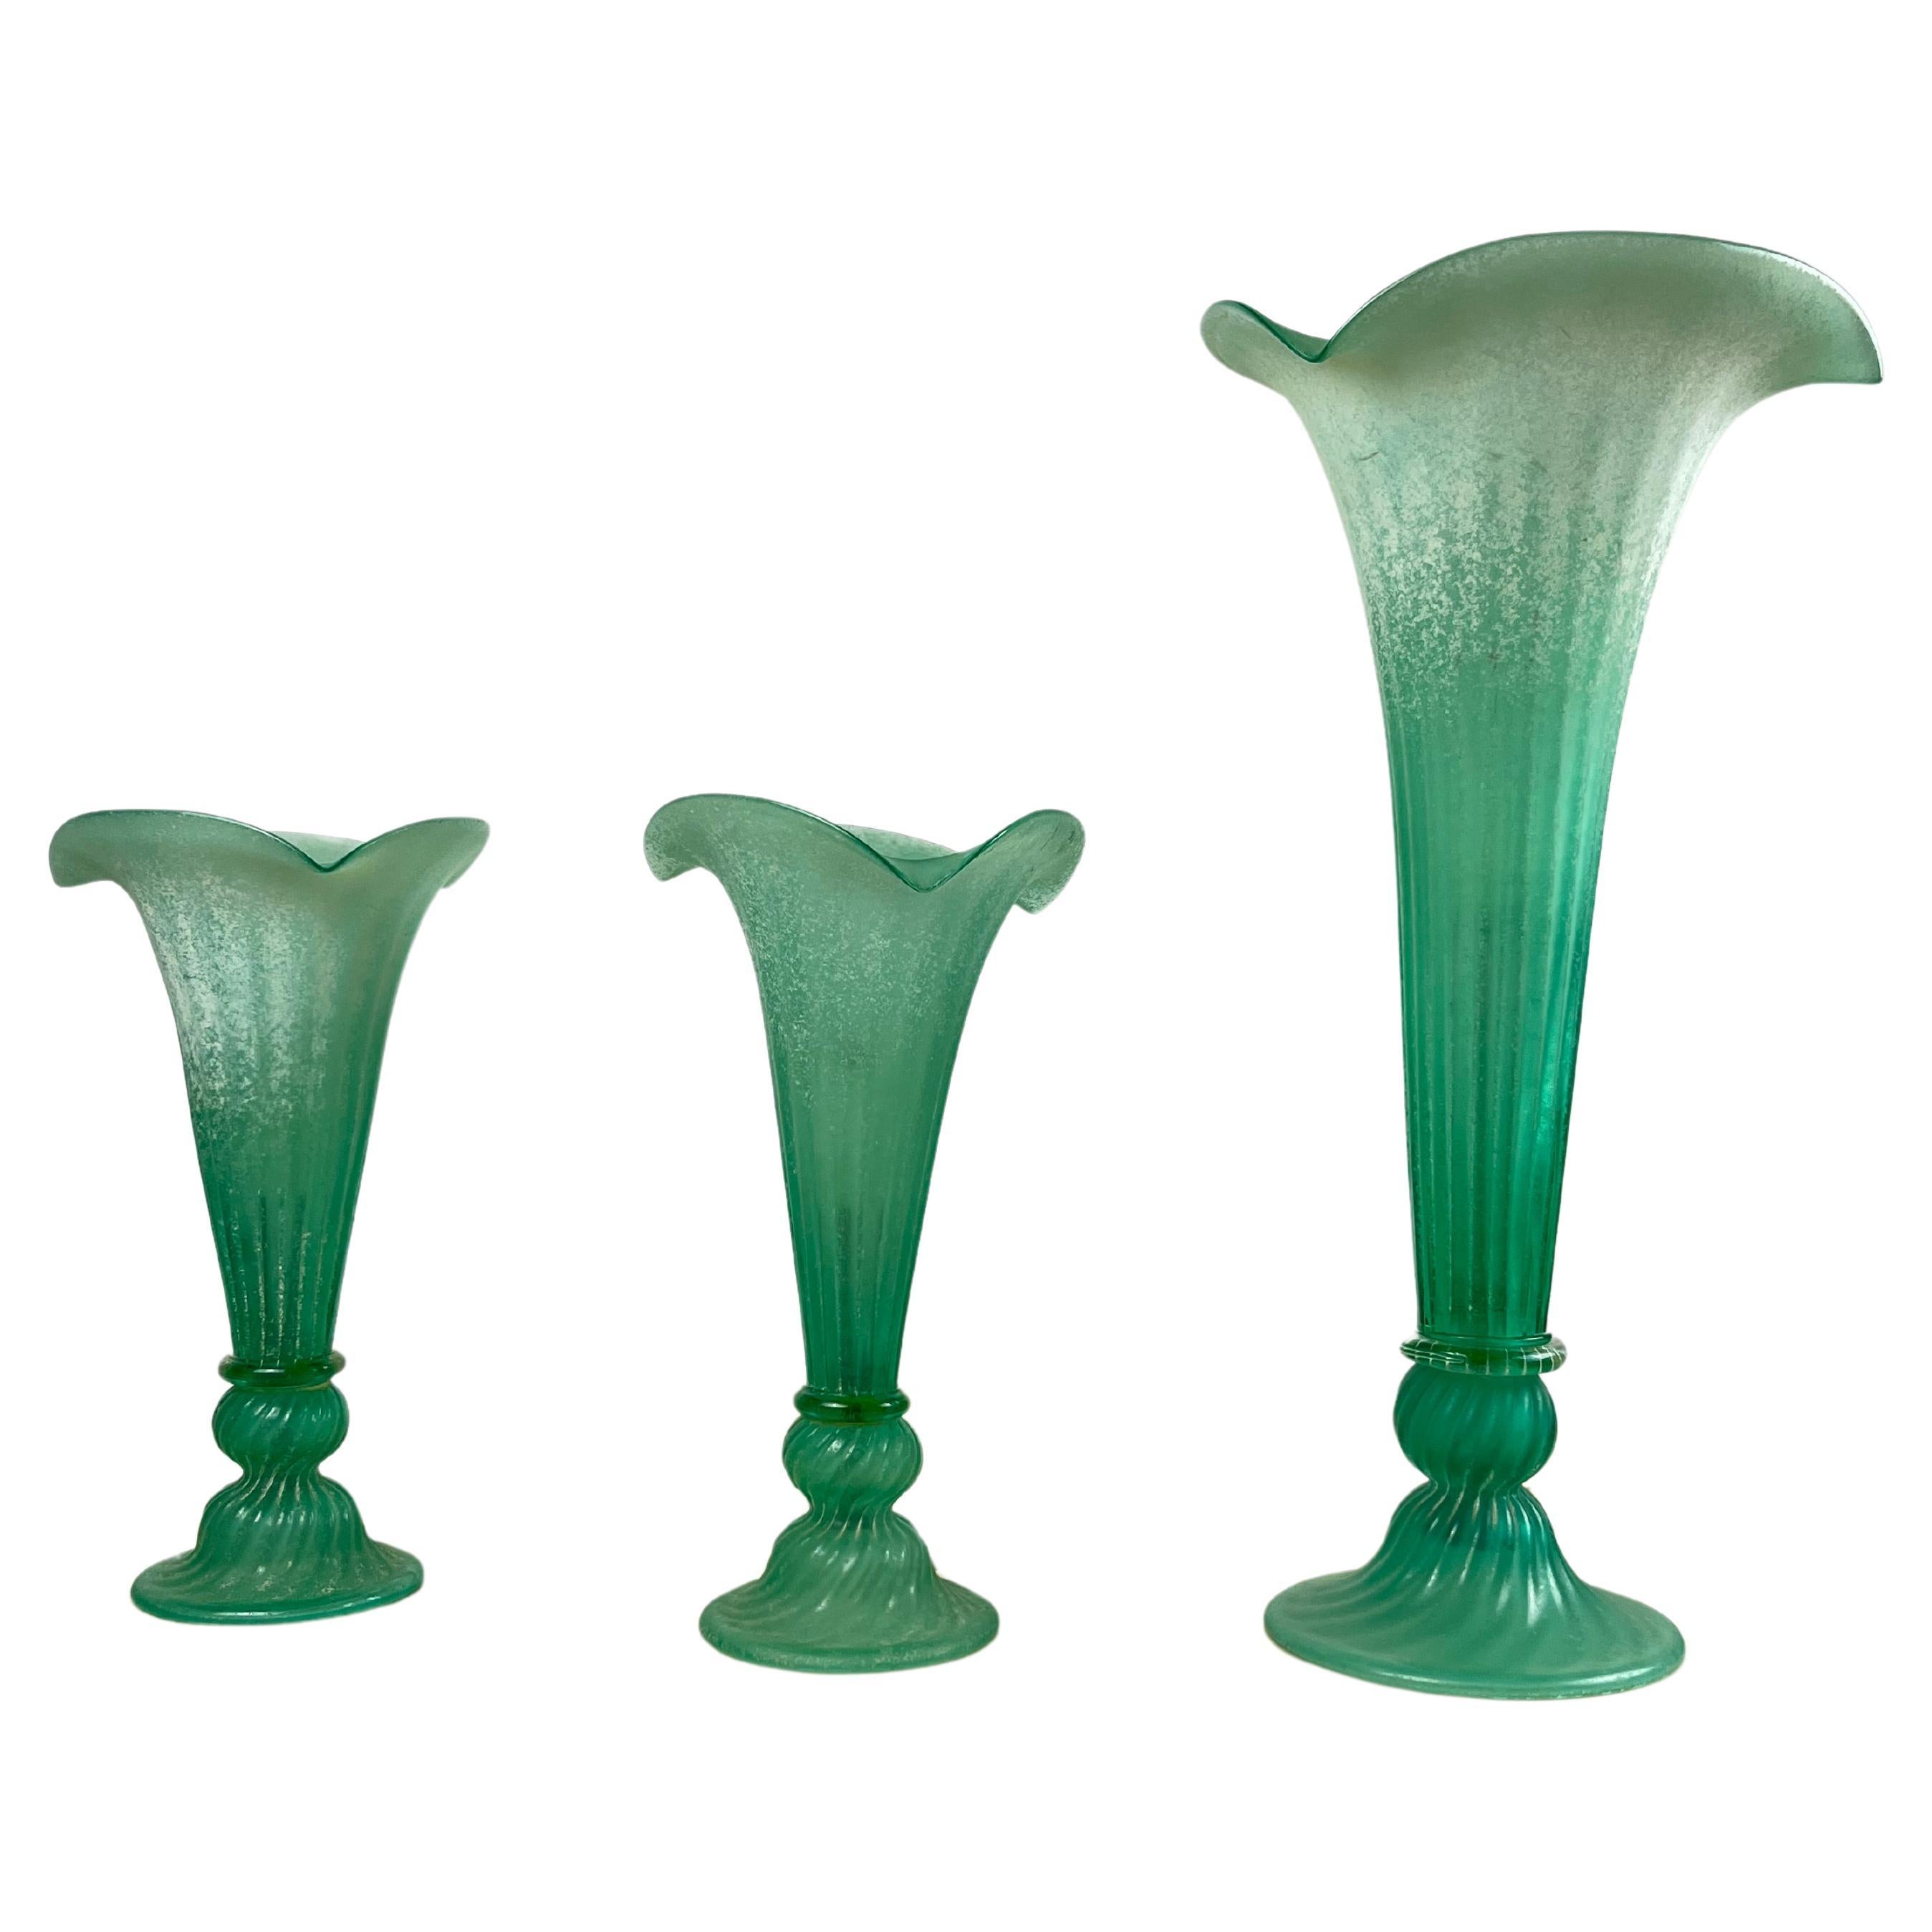 Set of 3 Green Murano Glass Lamps Italian Design  1980s.